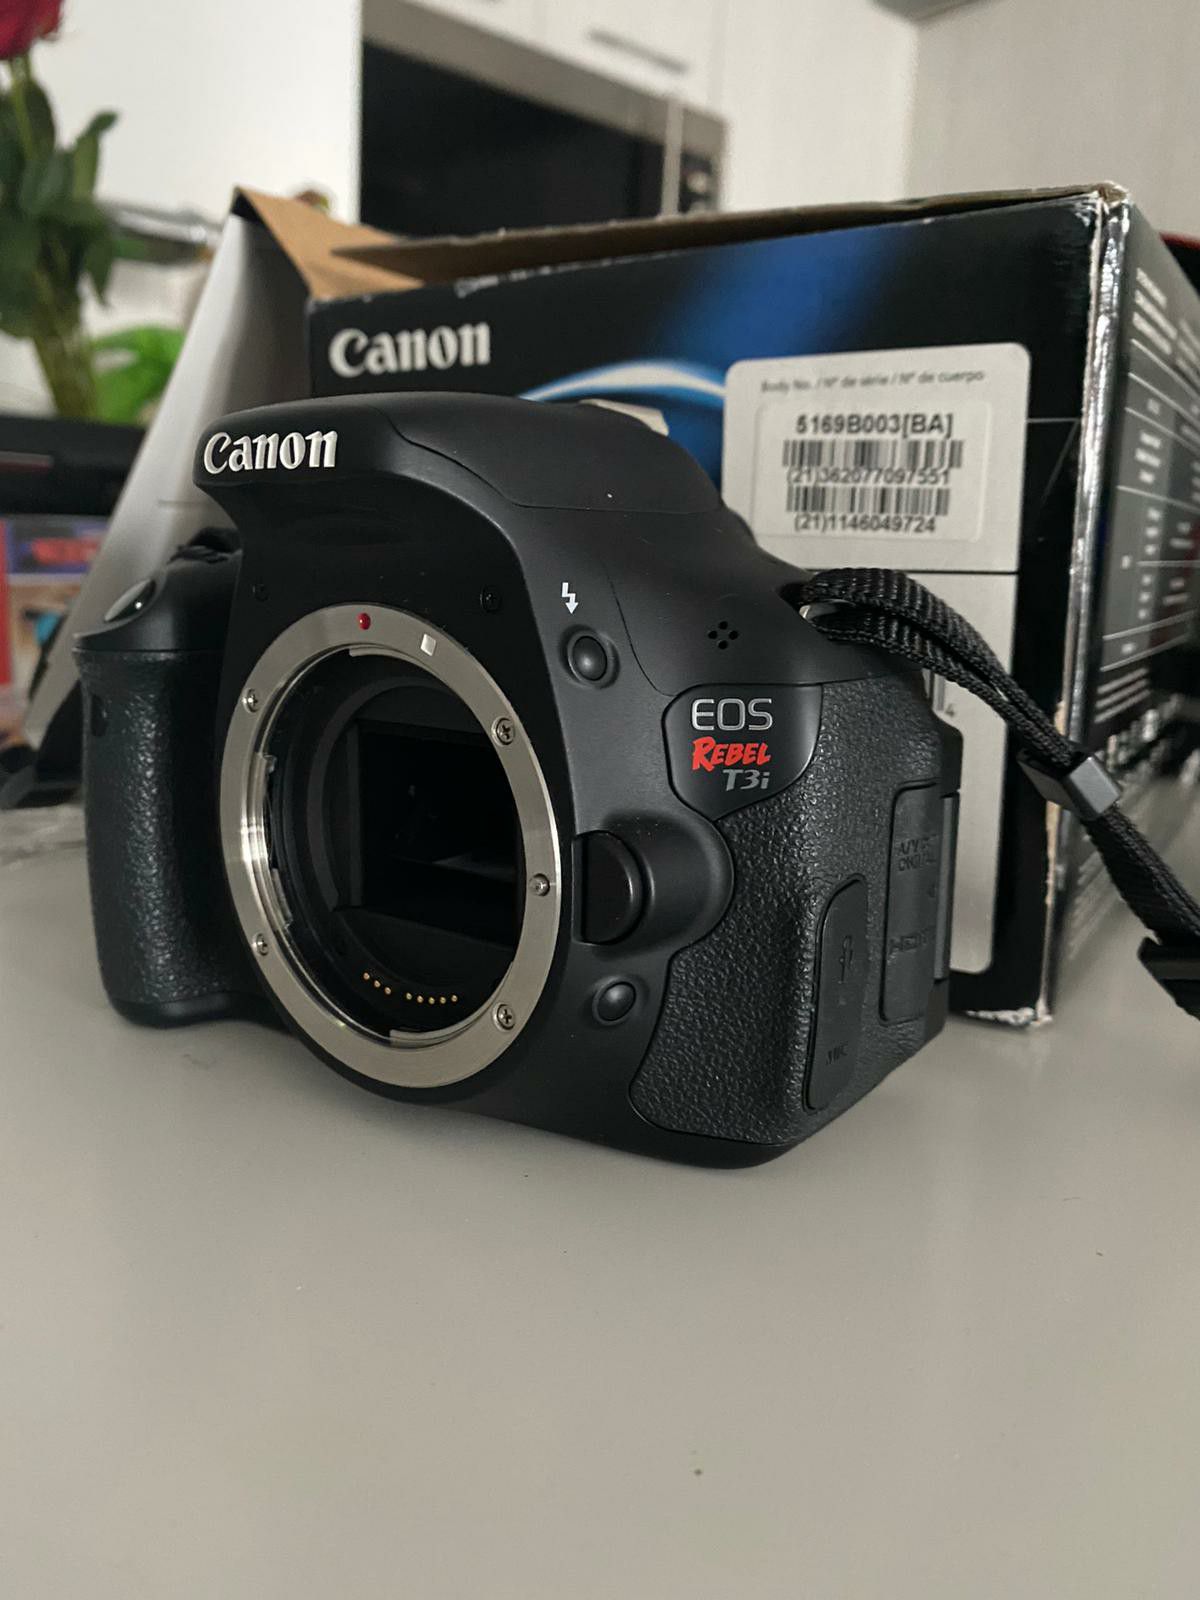 Canon Rebel T3i with original box + fisheye lens